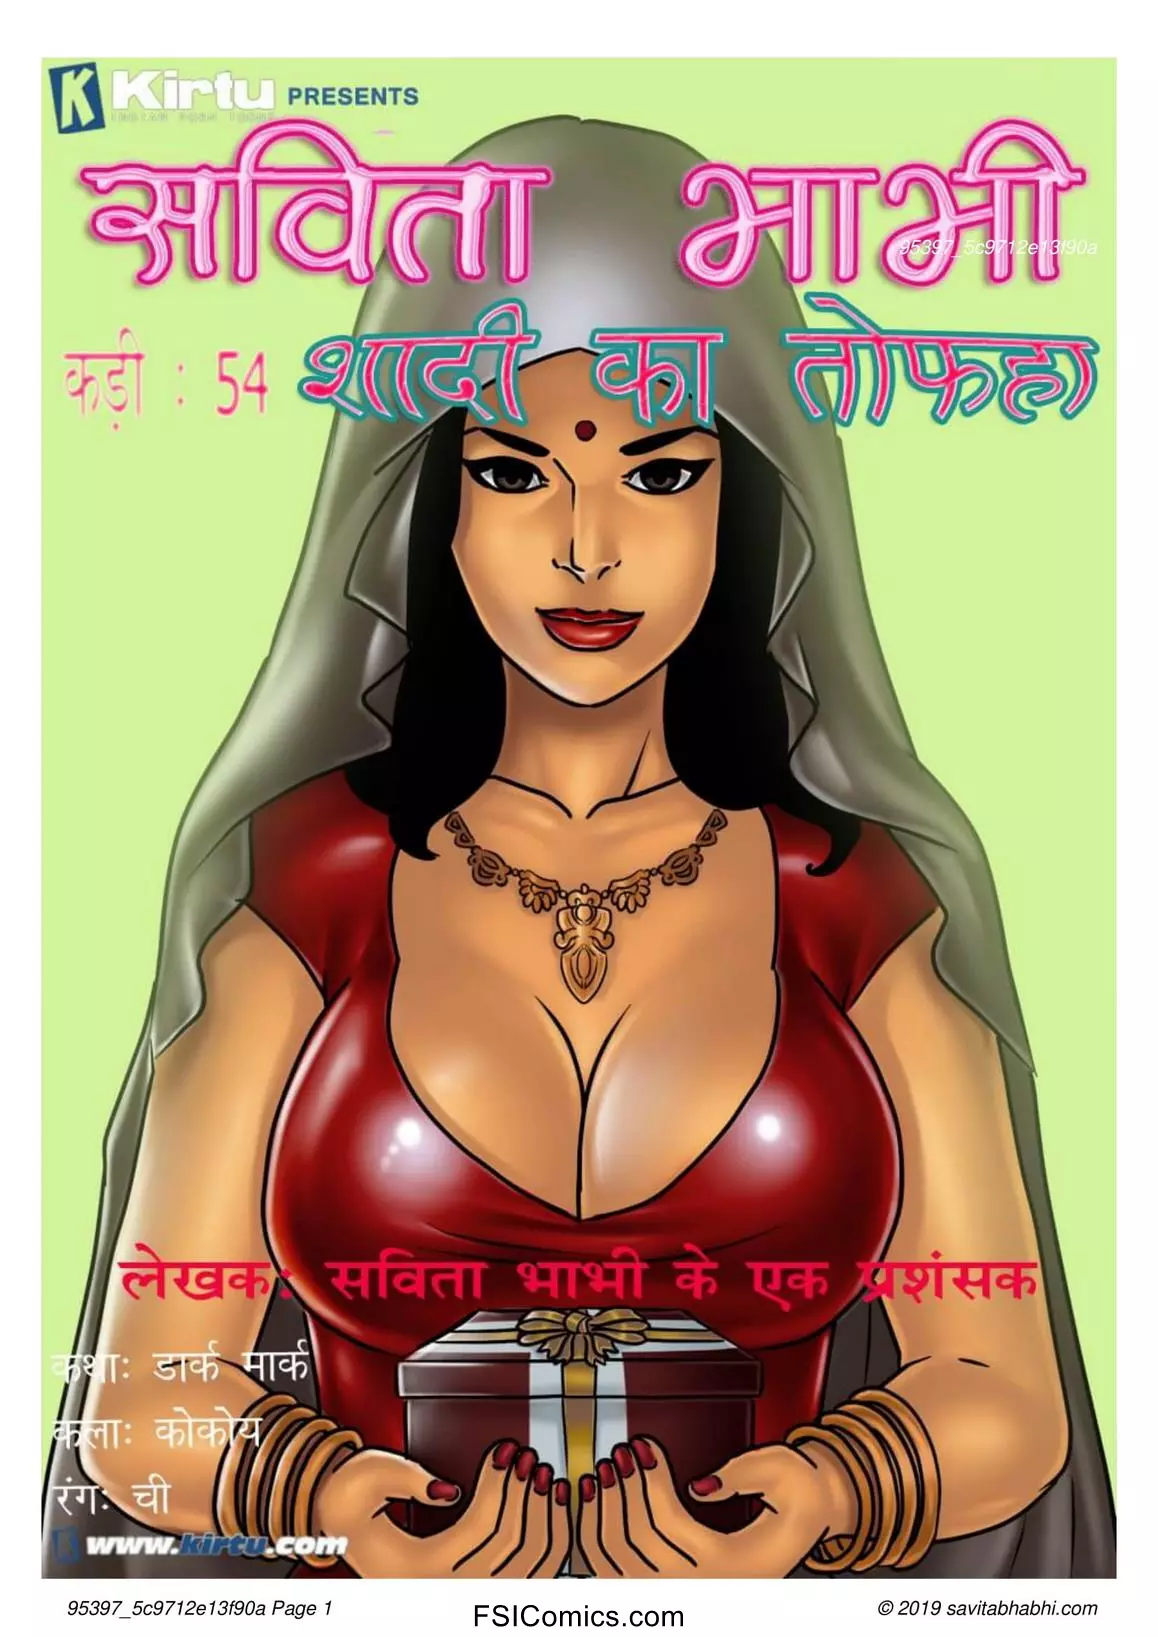 Savita Bhabhi Episode 54 Hindi – शादी का तोहफ़ा - 3 - FSIComics